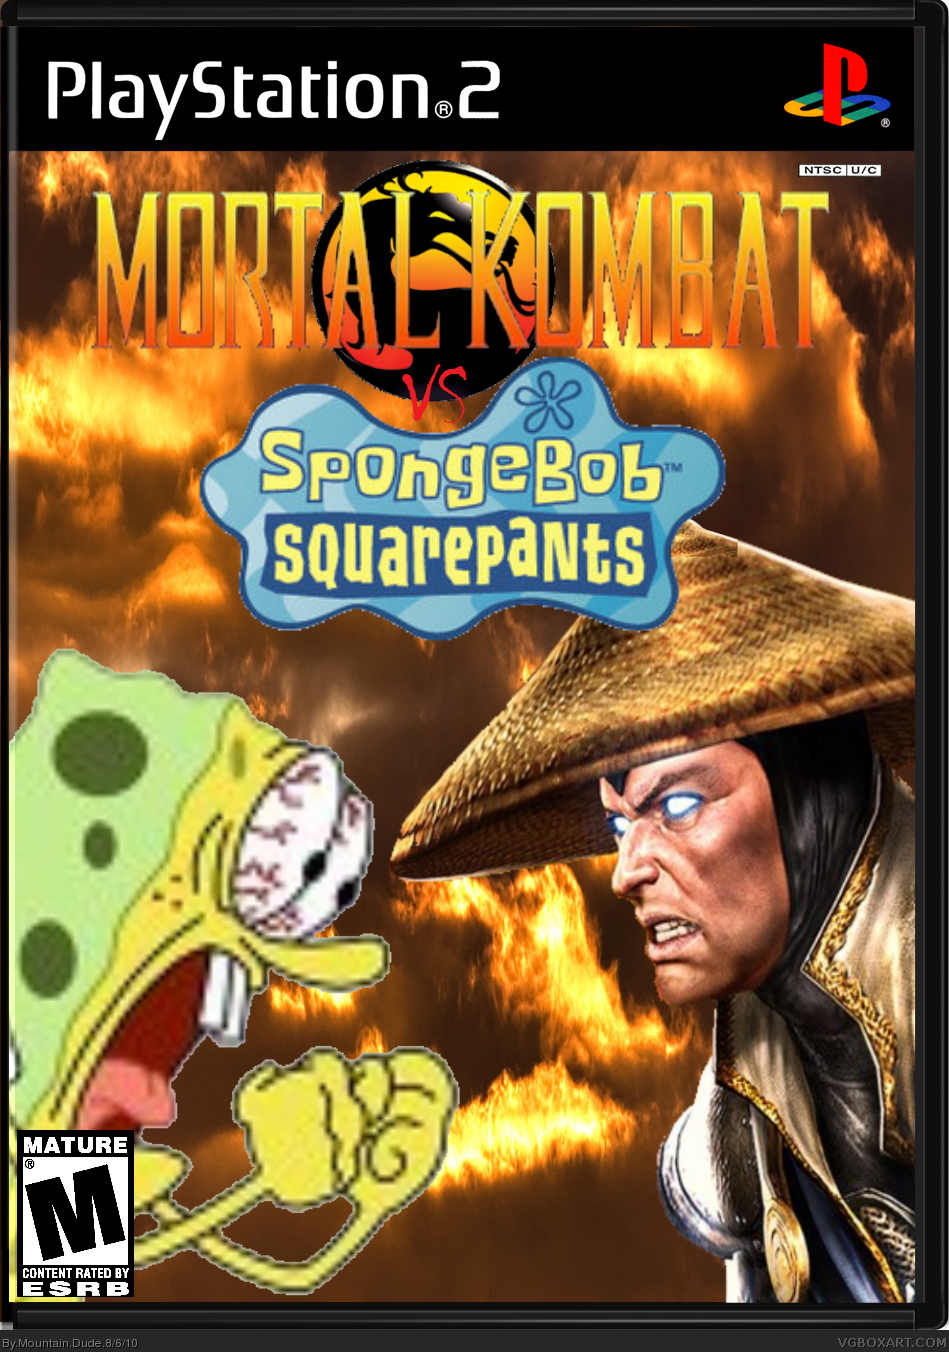 Mortal Kombat vs. Spongebob Squarepants box cover